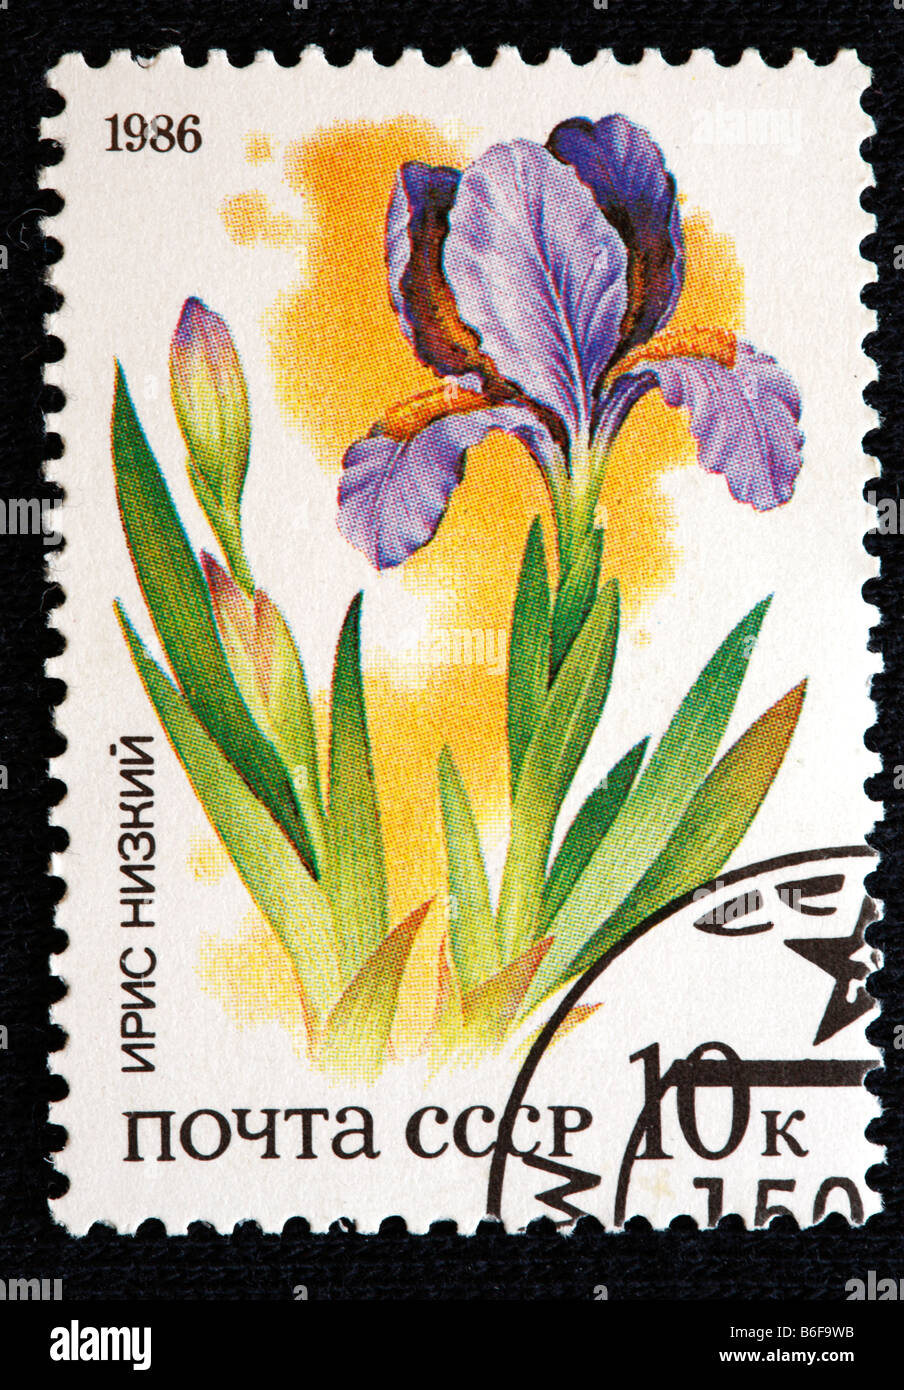 Dwarf Iris (Iris pumila), postage stamp, USSR, 1986 Stock Photo